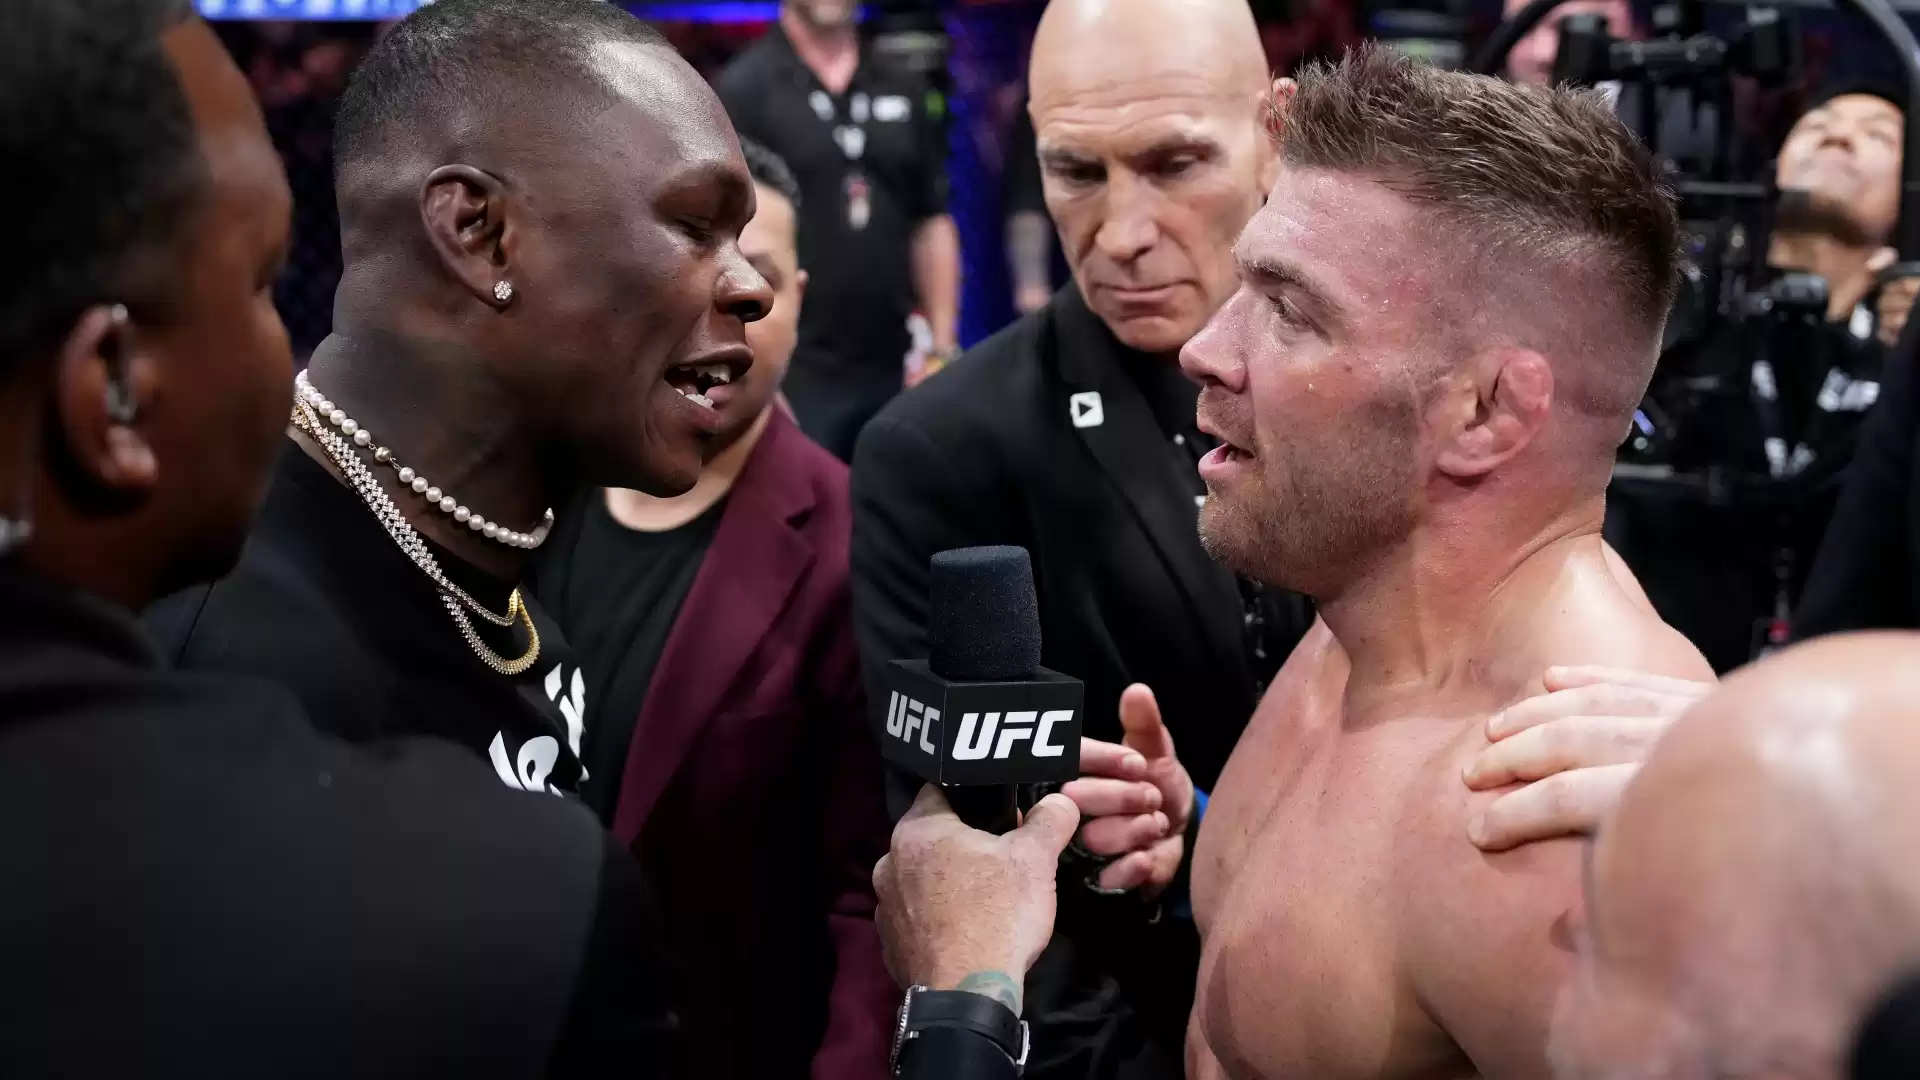 Israel Adesanya uses racist language towards Dricus Du Plessis during intense UFC 290 confrontation